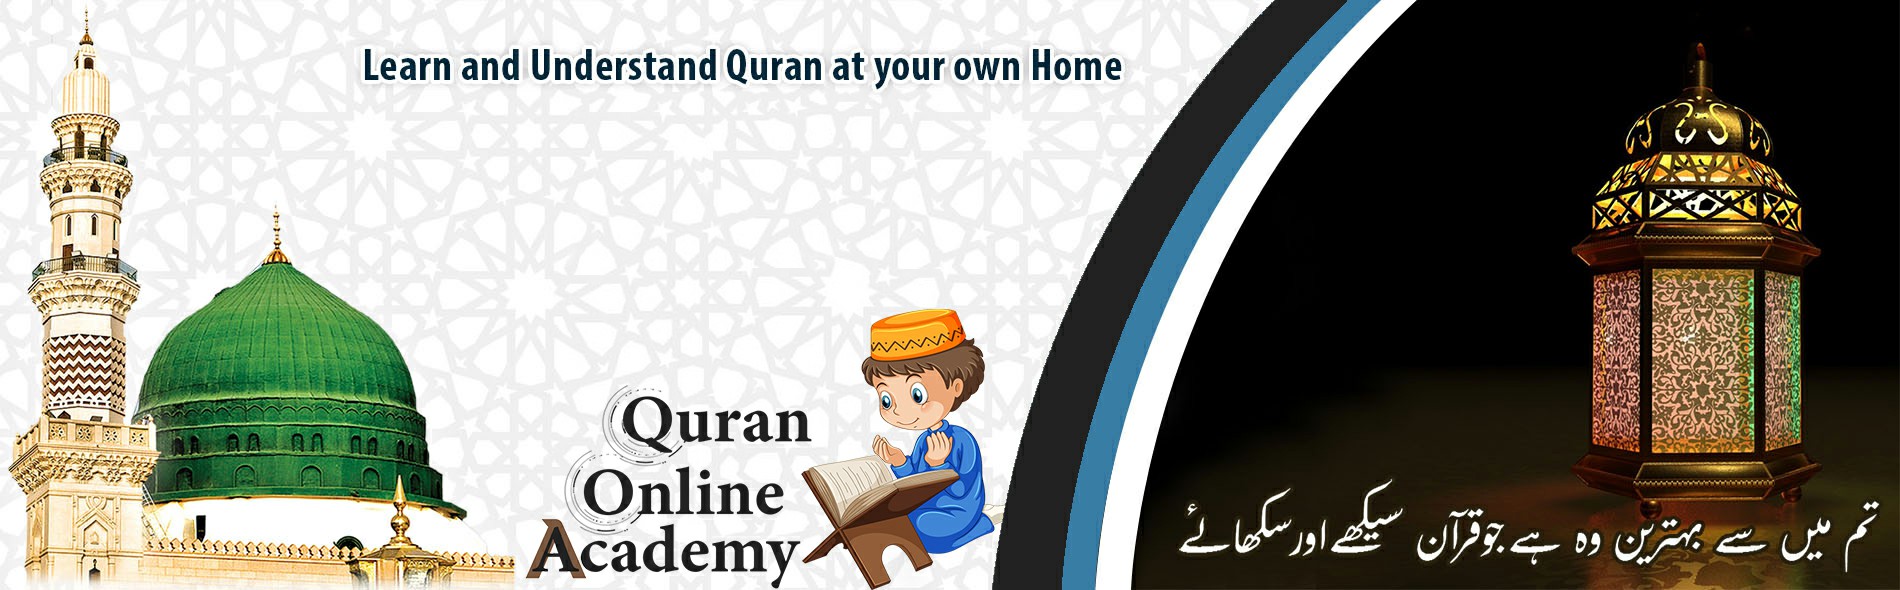 Learn Quran Academy Online AMERICA